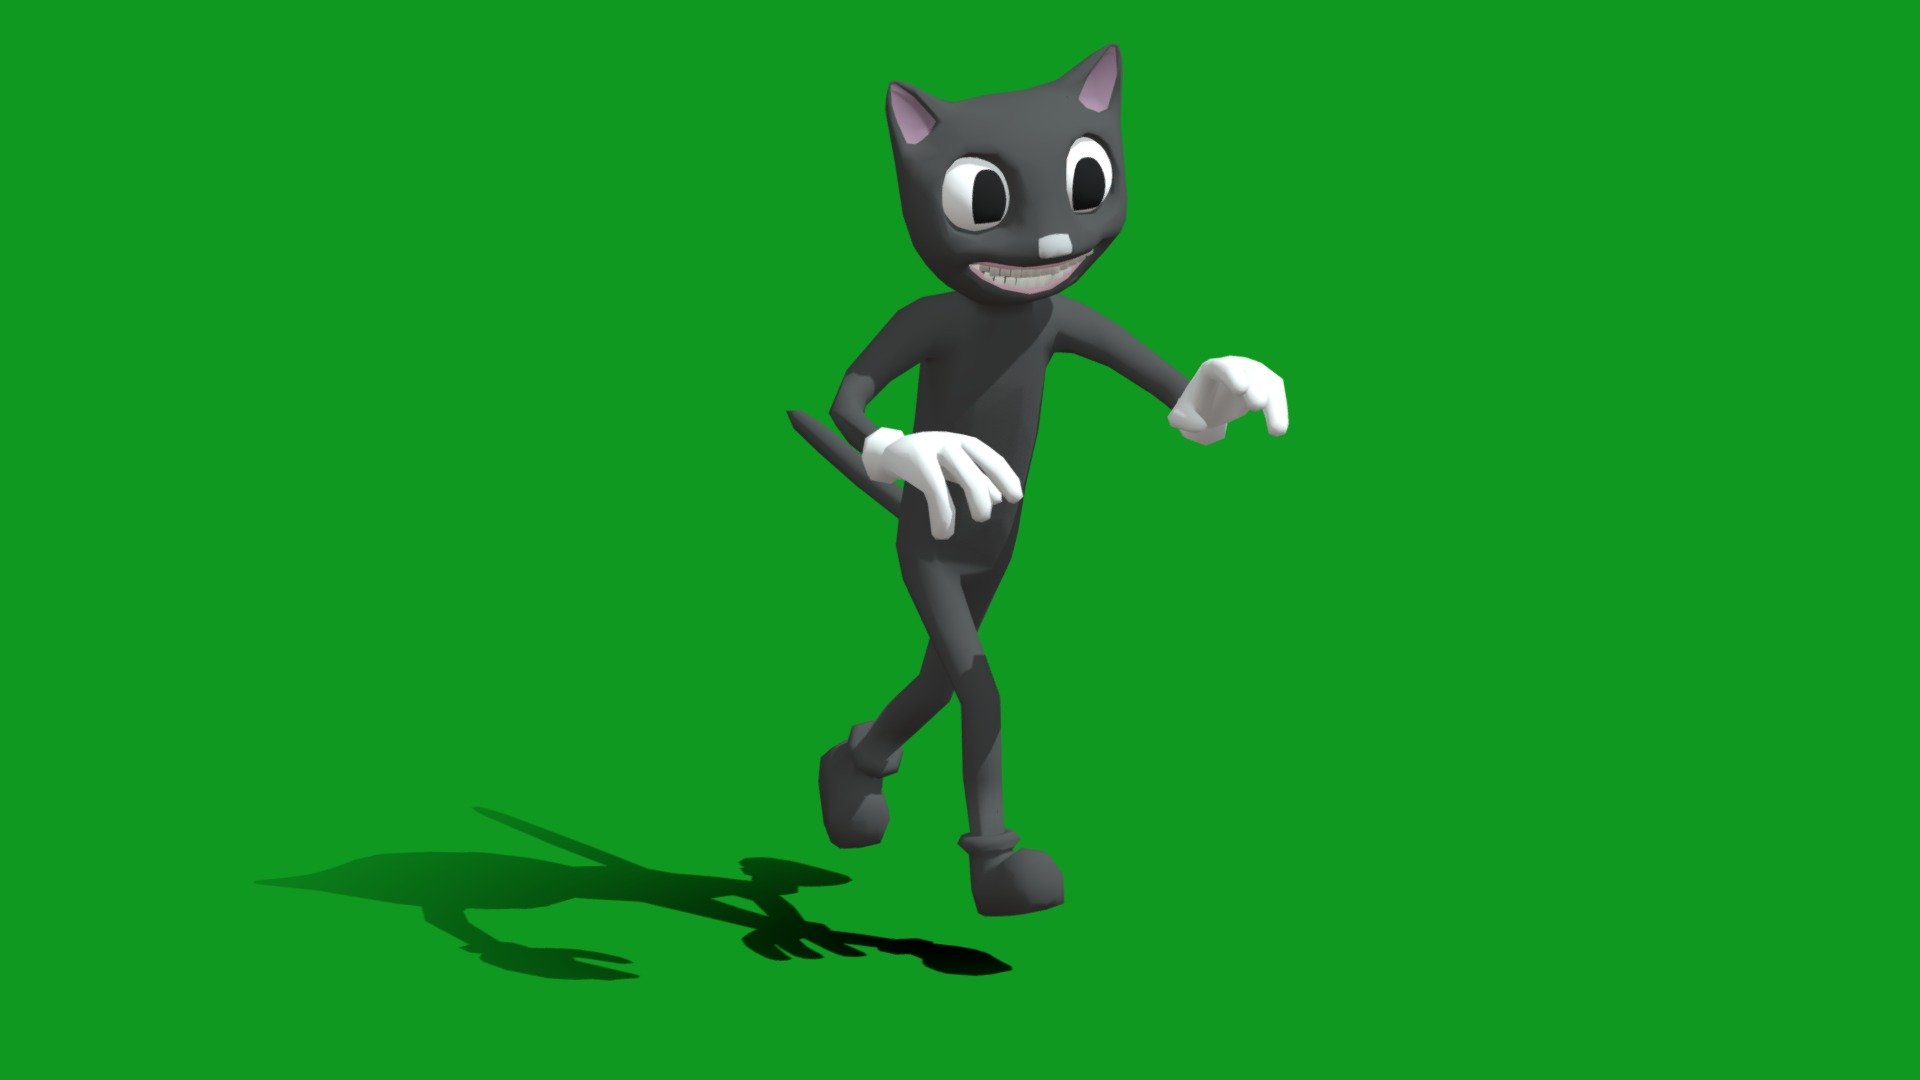 Model by @mrgrigins - Cartoon Cat Running - Download Free 3D model by Edward Johnson 3 (@sirenhead1929) 3d model